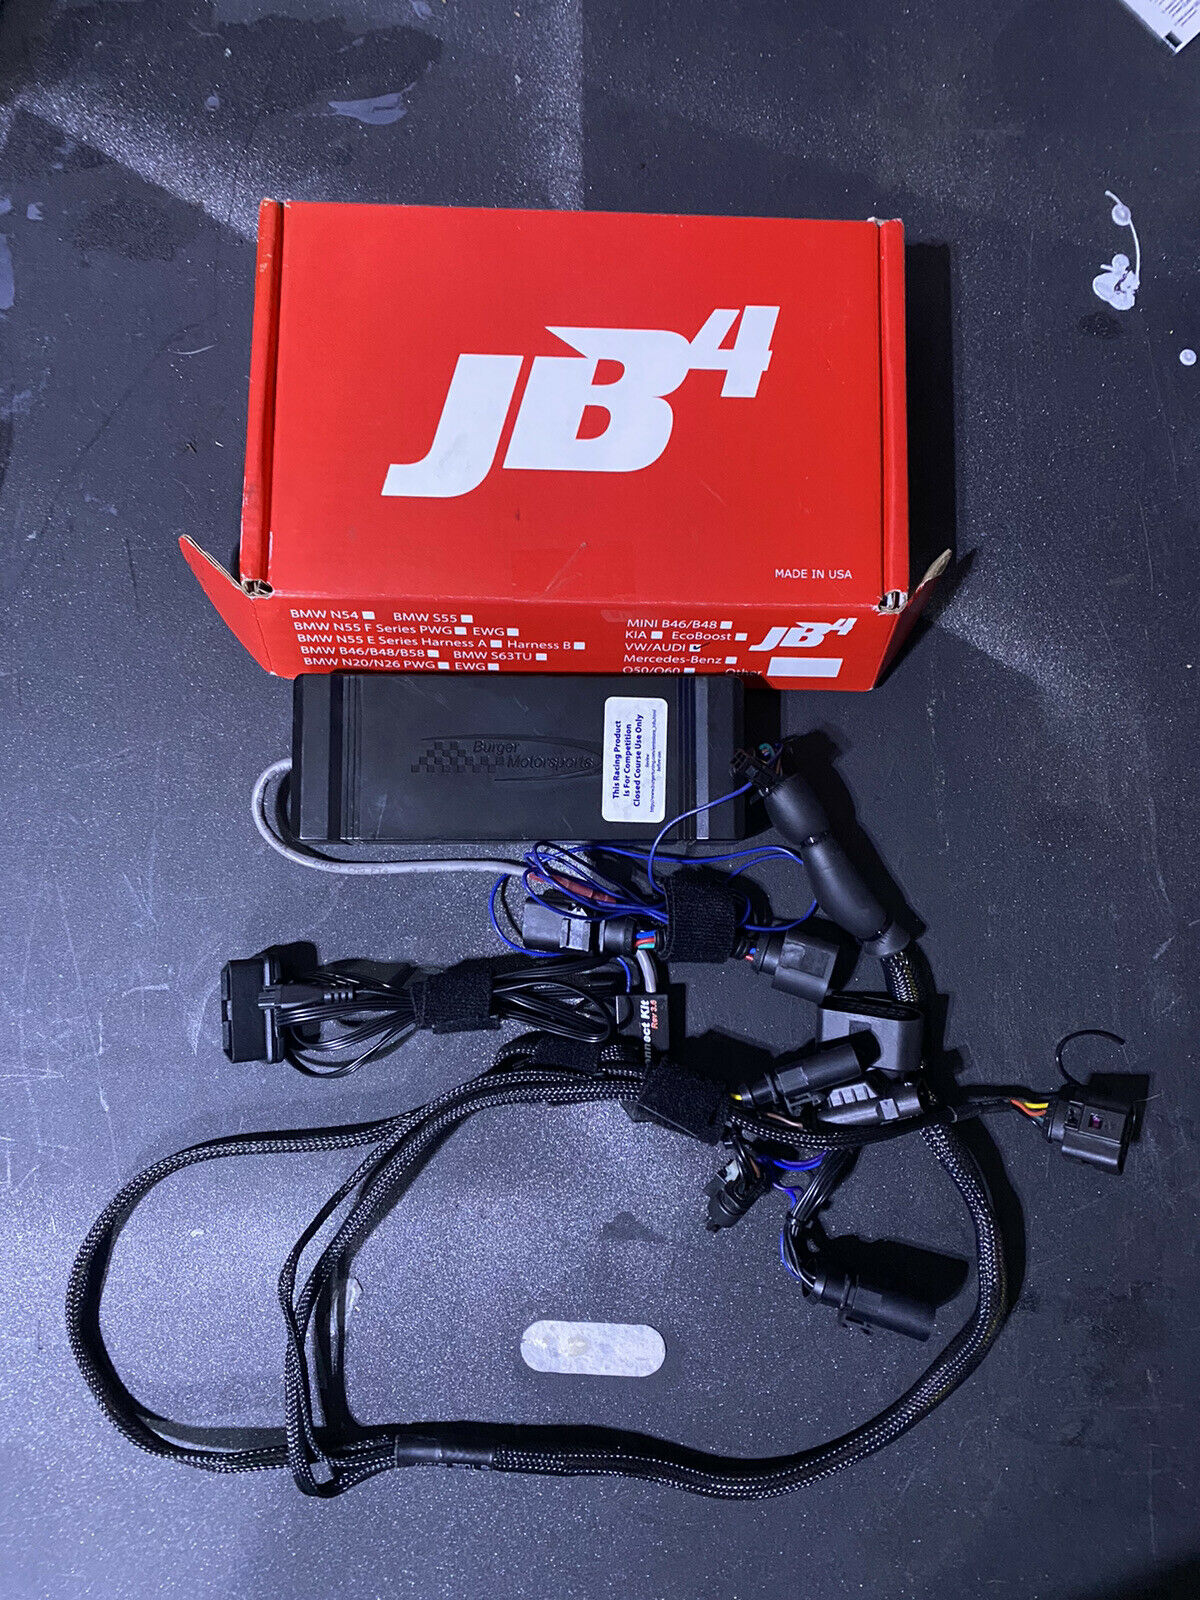 jb4-1.jpg